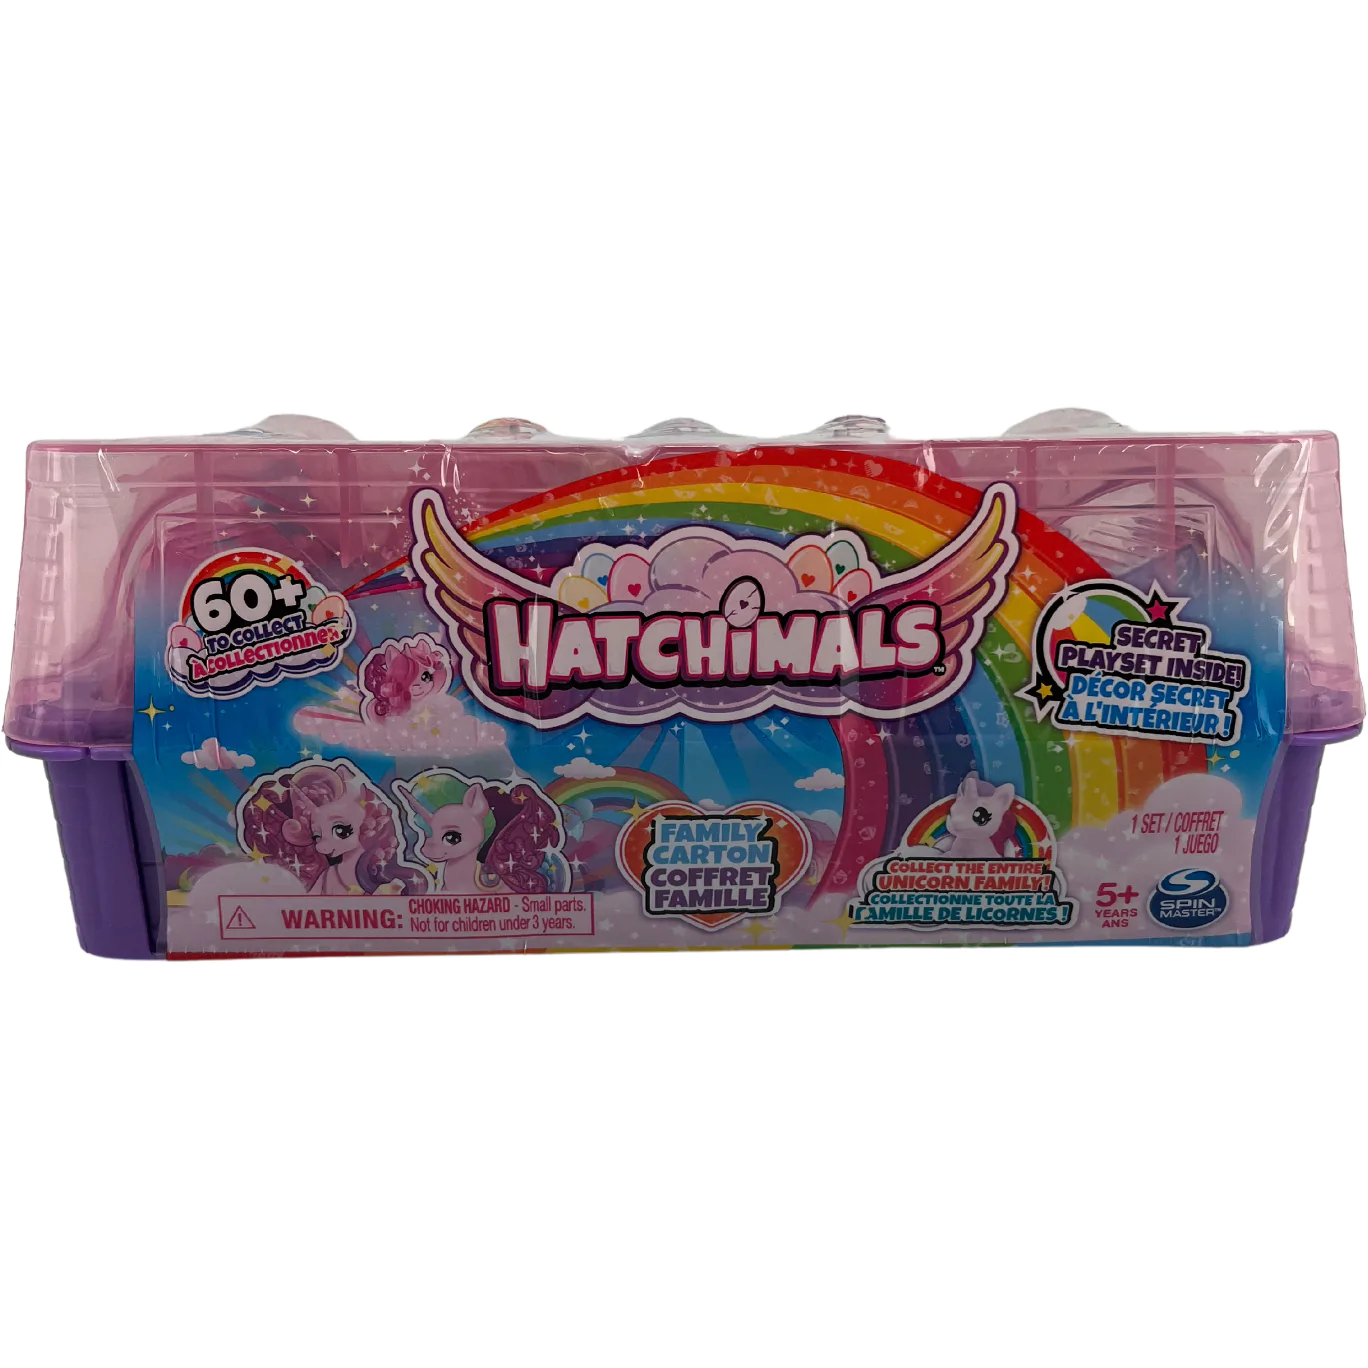 Hatchimals Family Carton / Unicorn Family / Surprise Playset